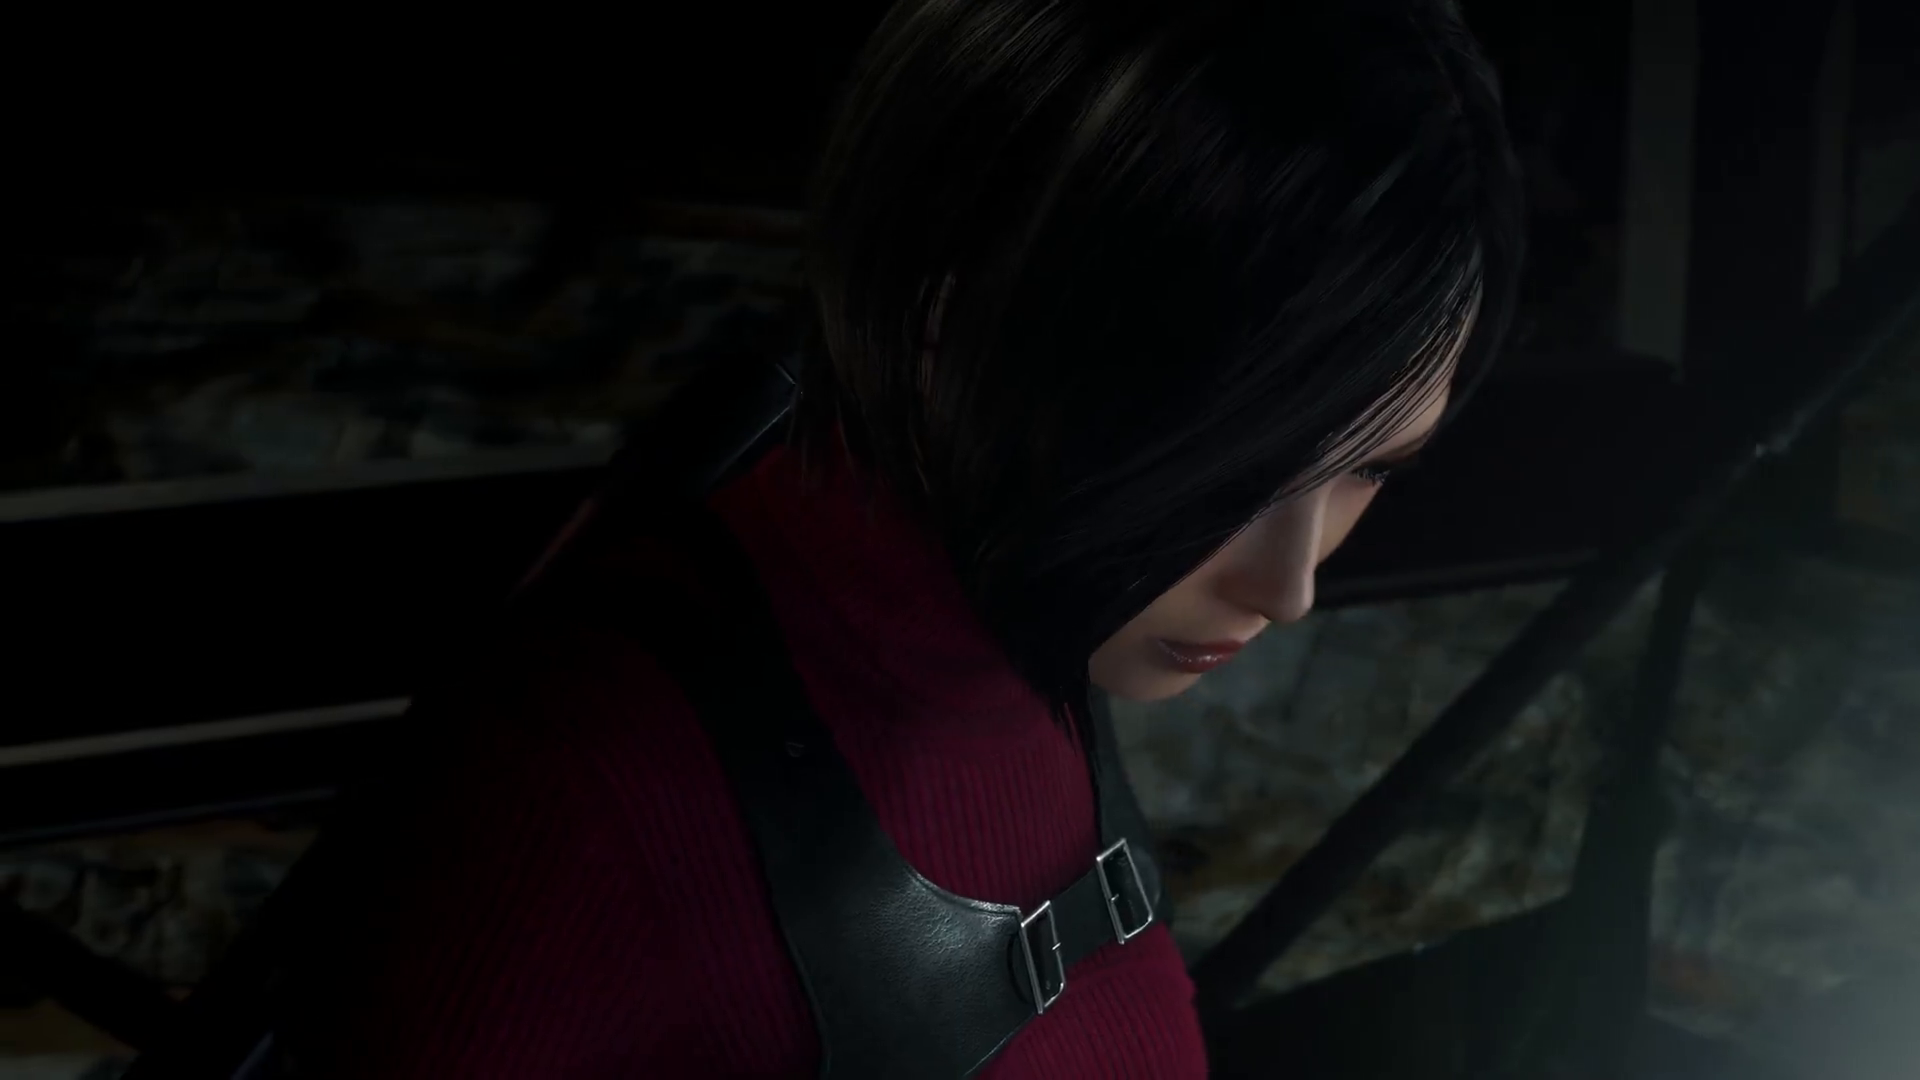 Resident Evil 4 Remake Separate Ways DLC arrives next week